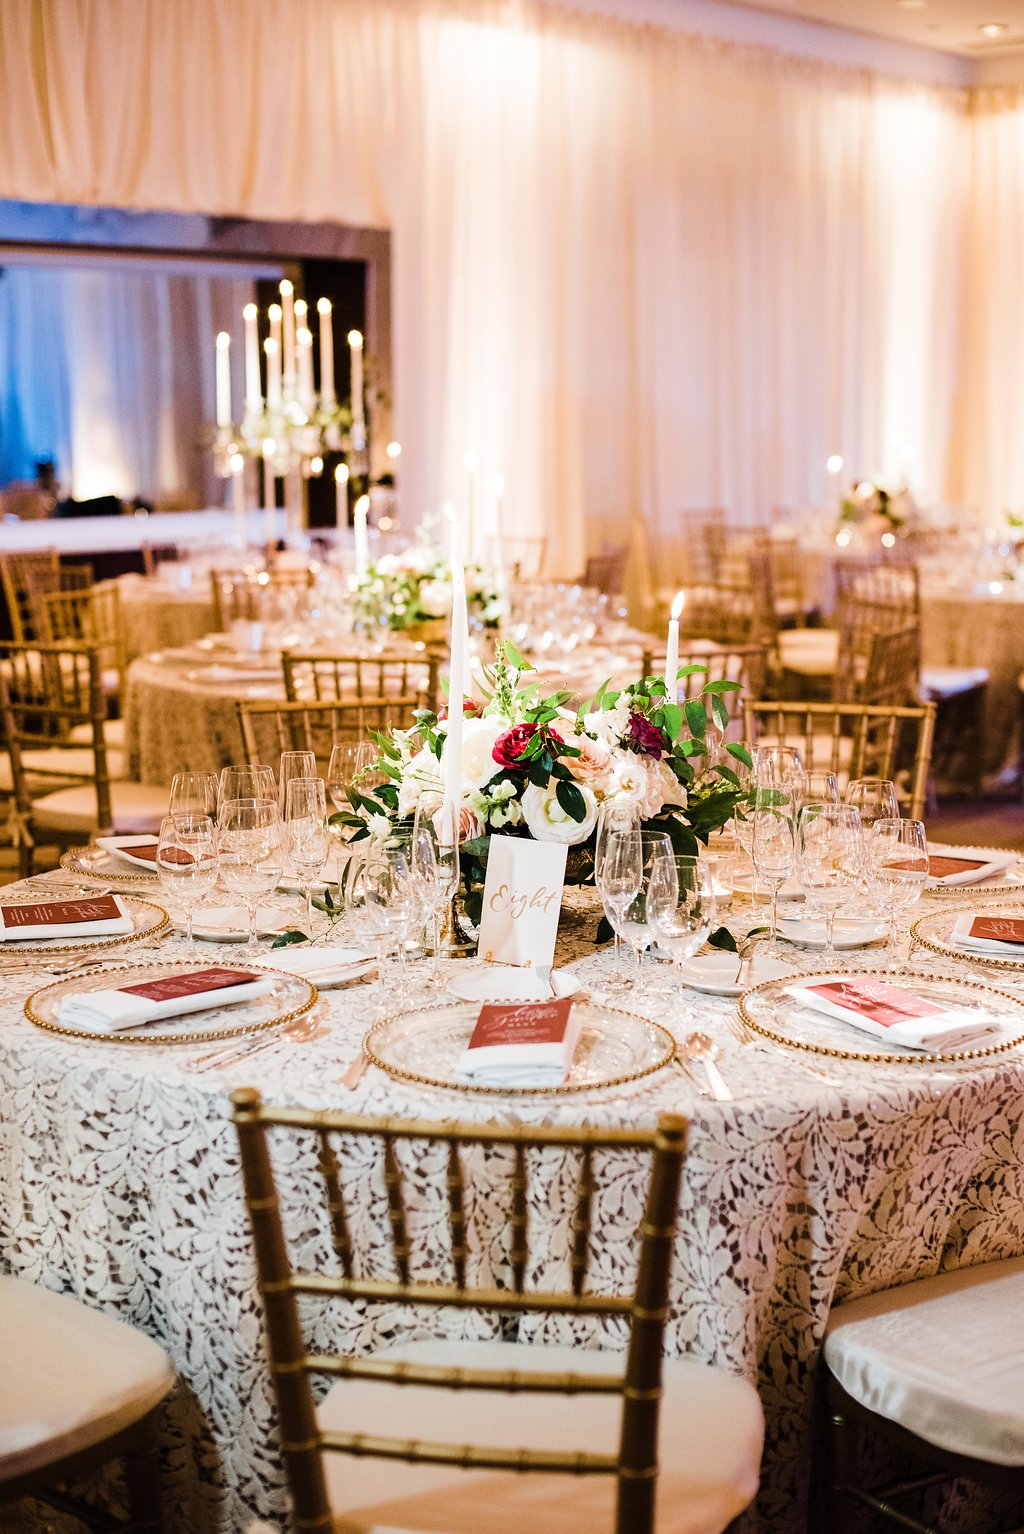 Romantic Winter Park Hyatt DC Wedding Reception, Wedding Planning by Bright Occasions, Lissa Ryan Photography